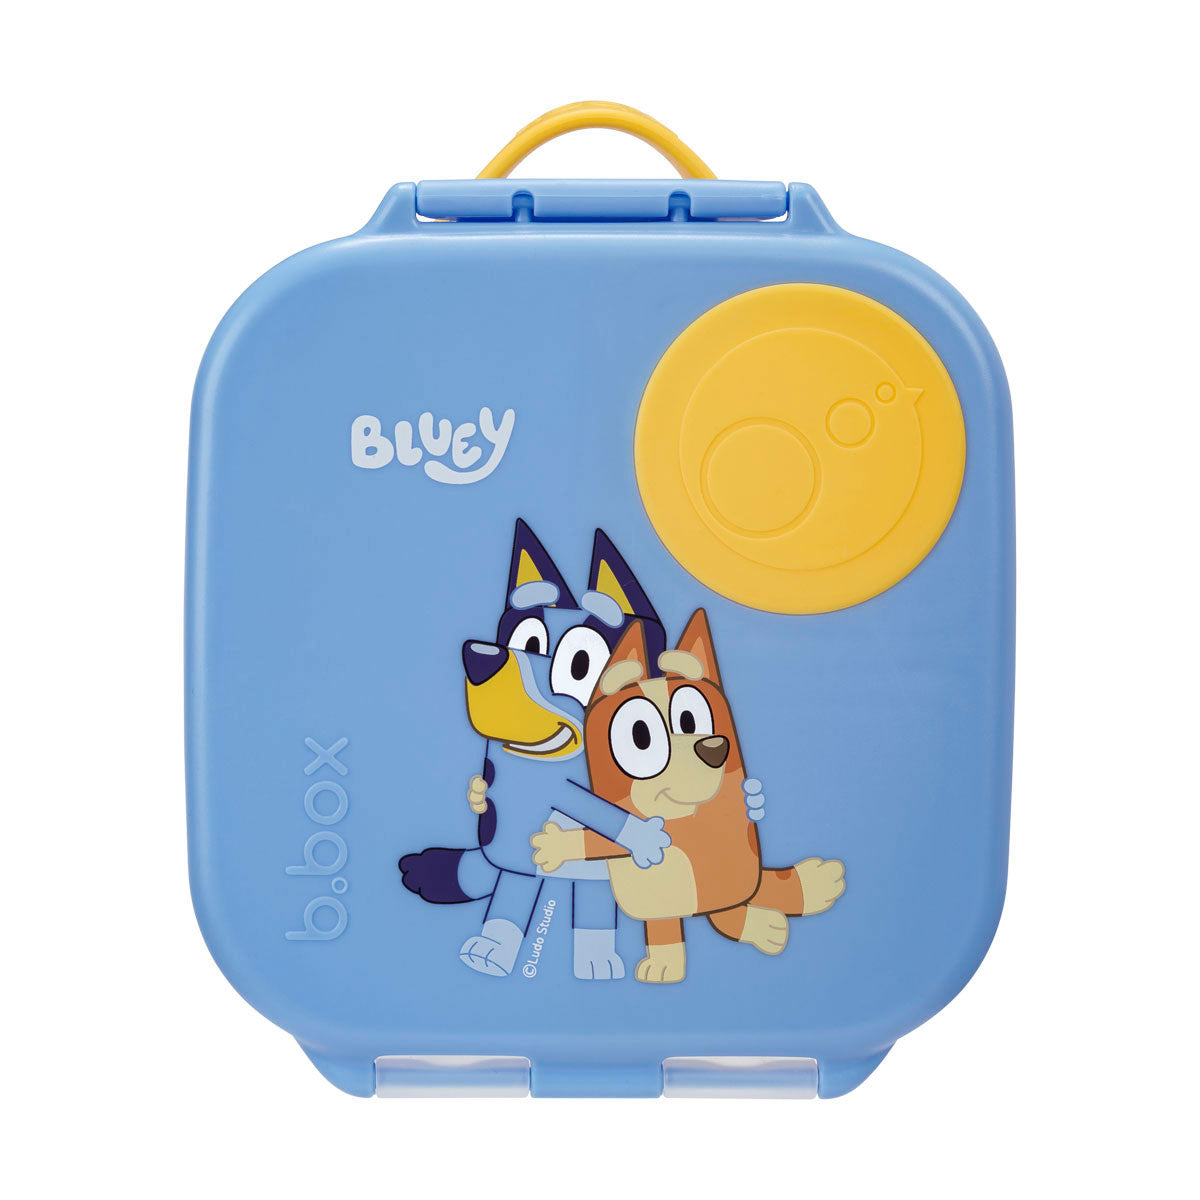 Bluey mini lunch box